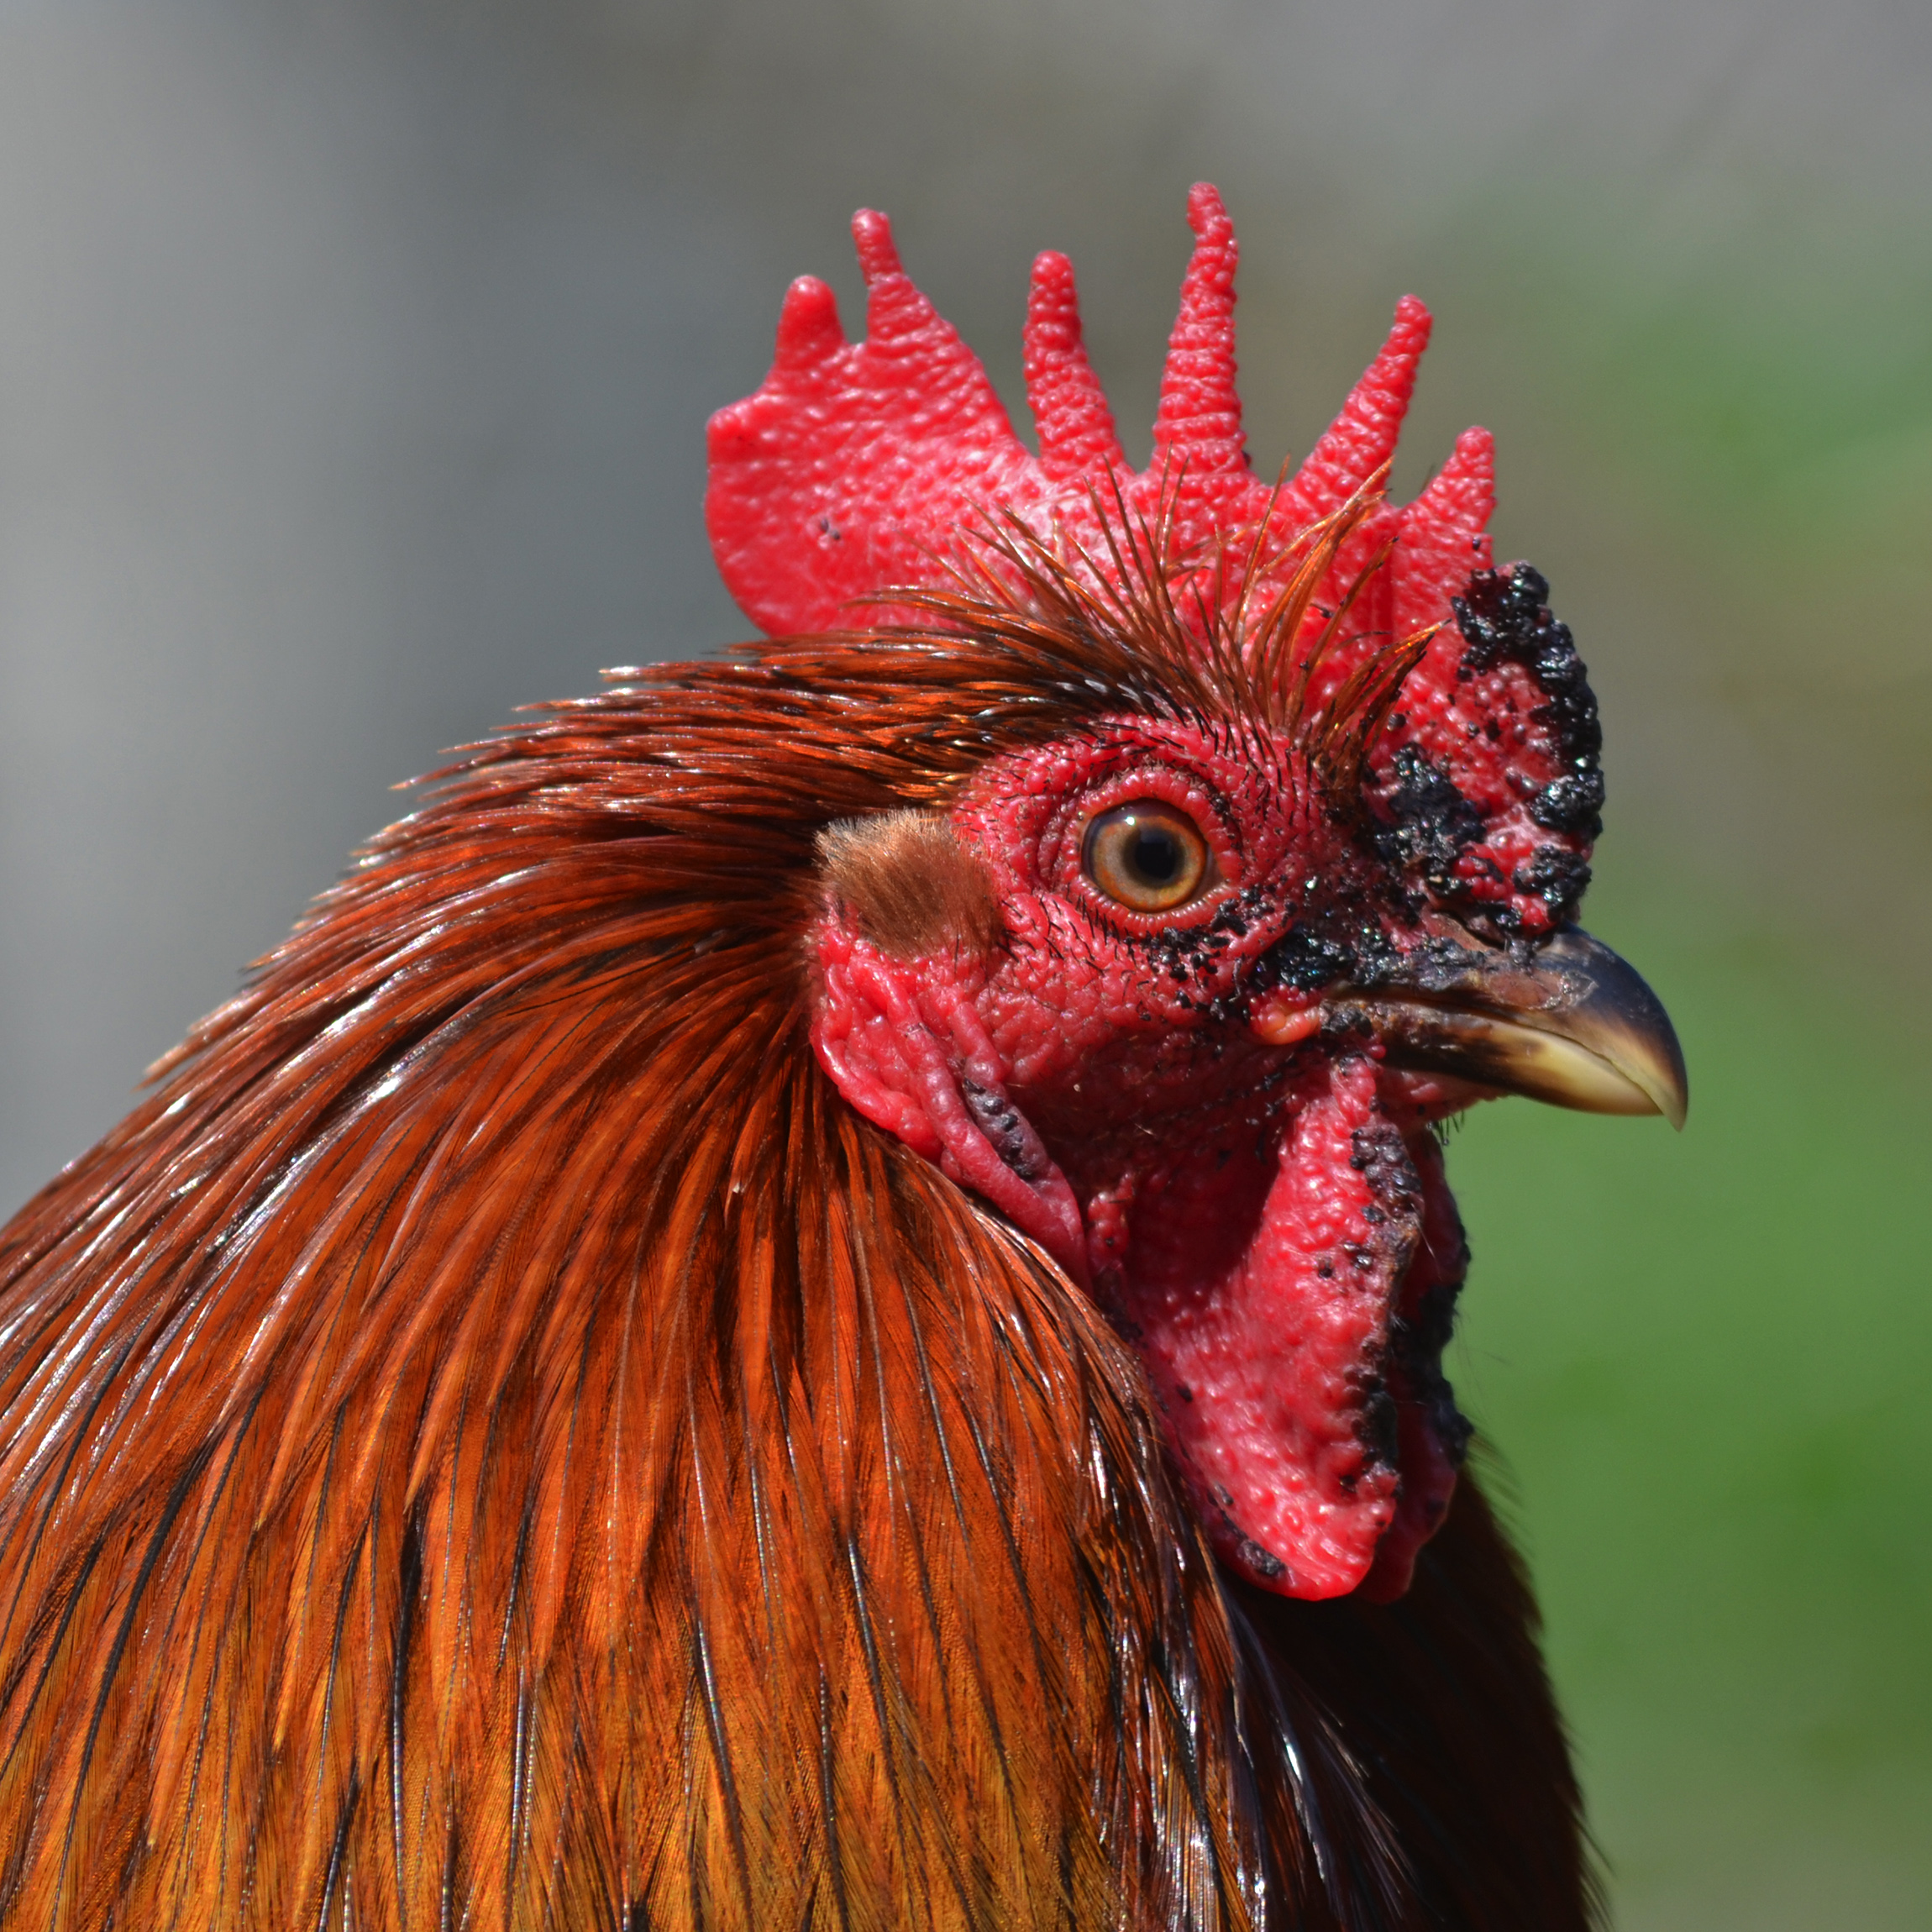 File:Paulx - Bantam rooster 03 - Wikimedia Commons